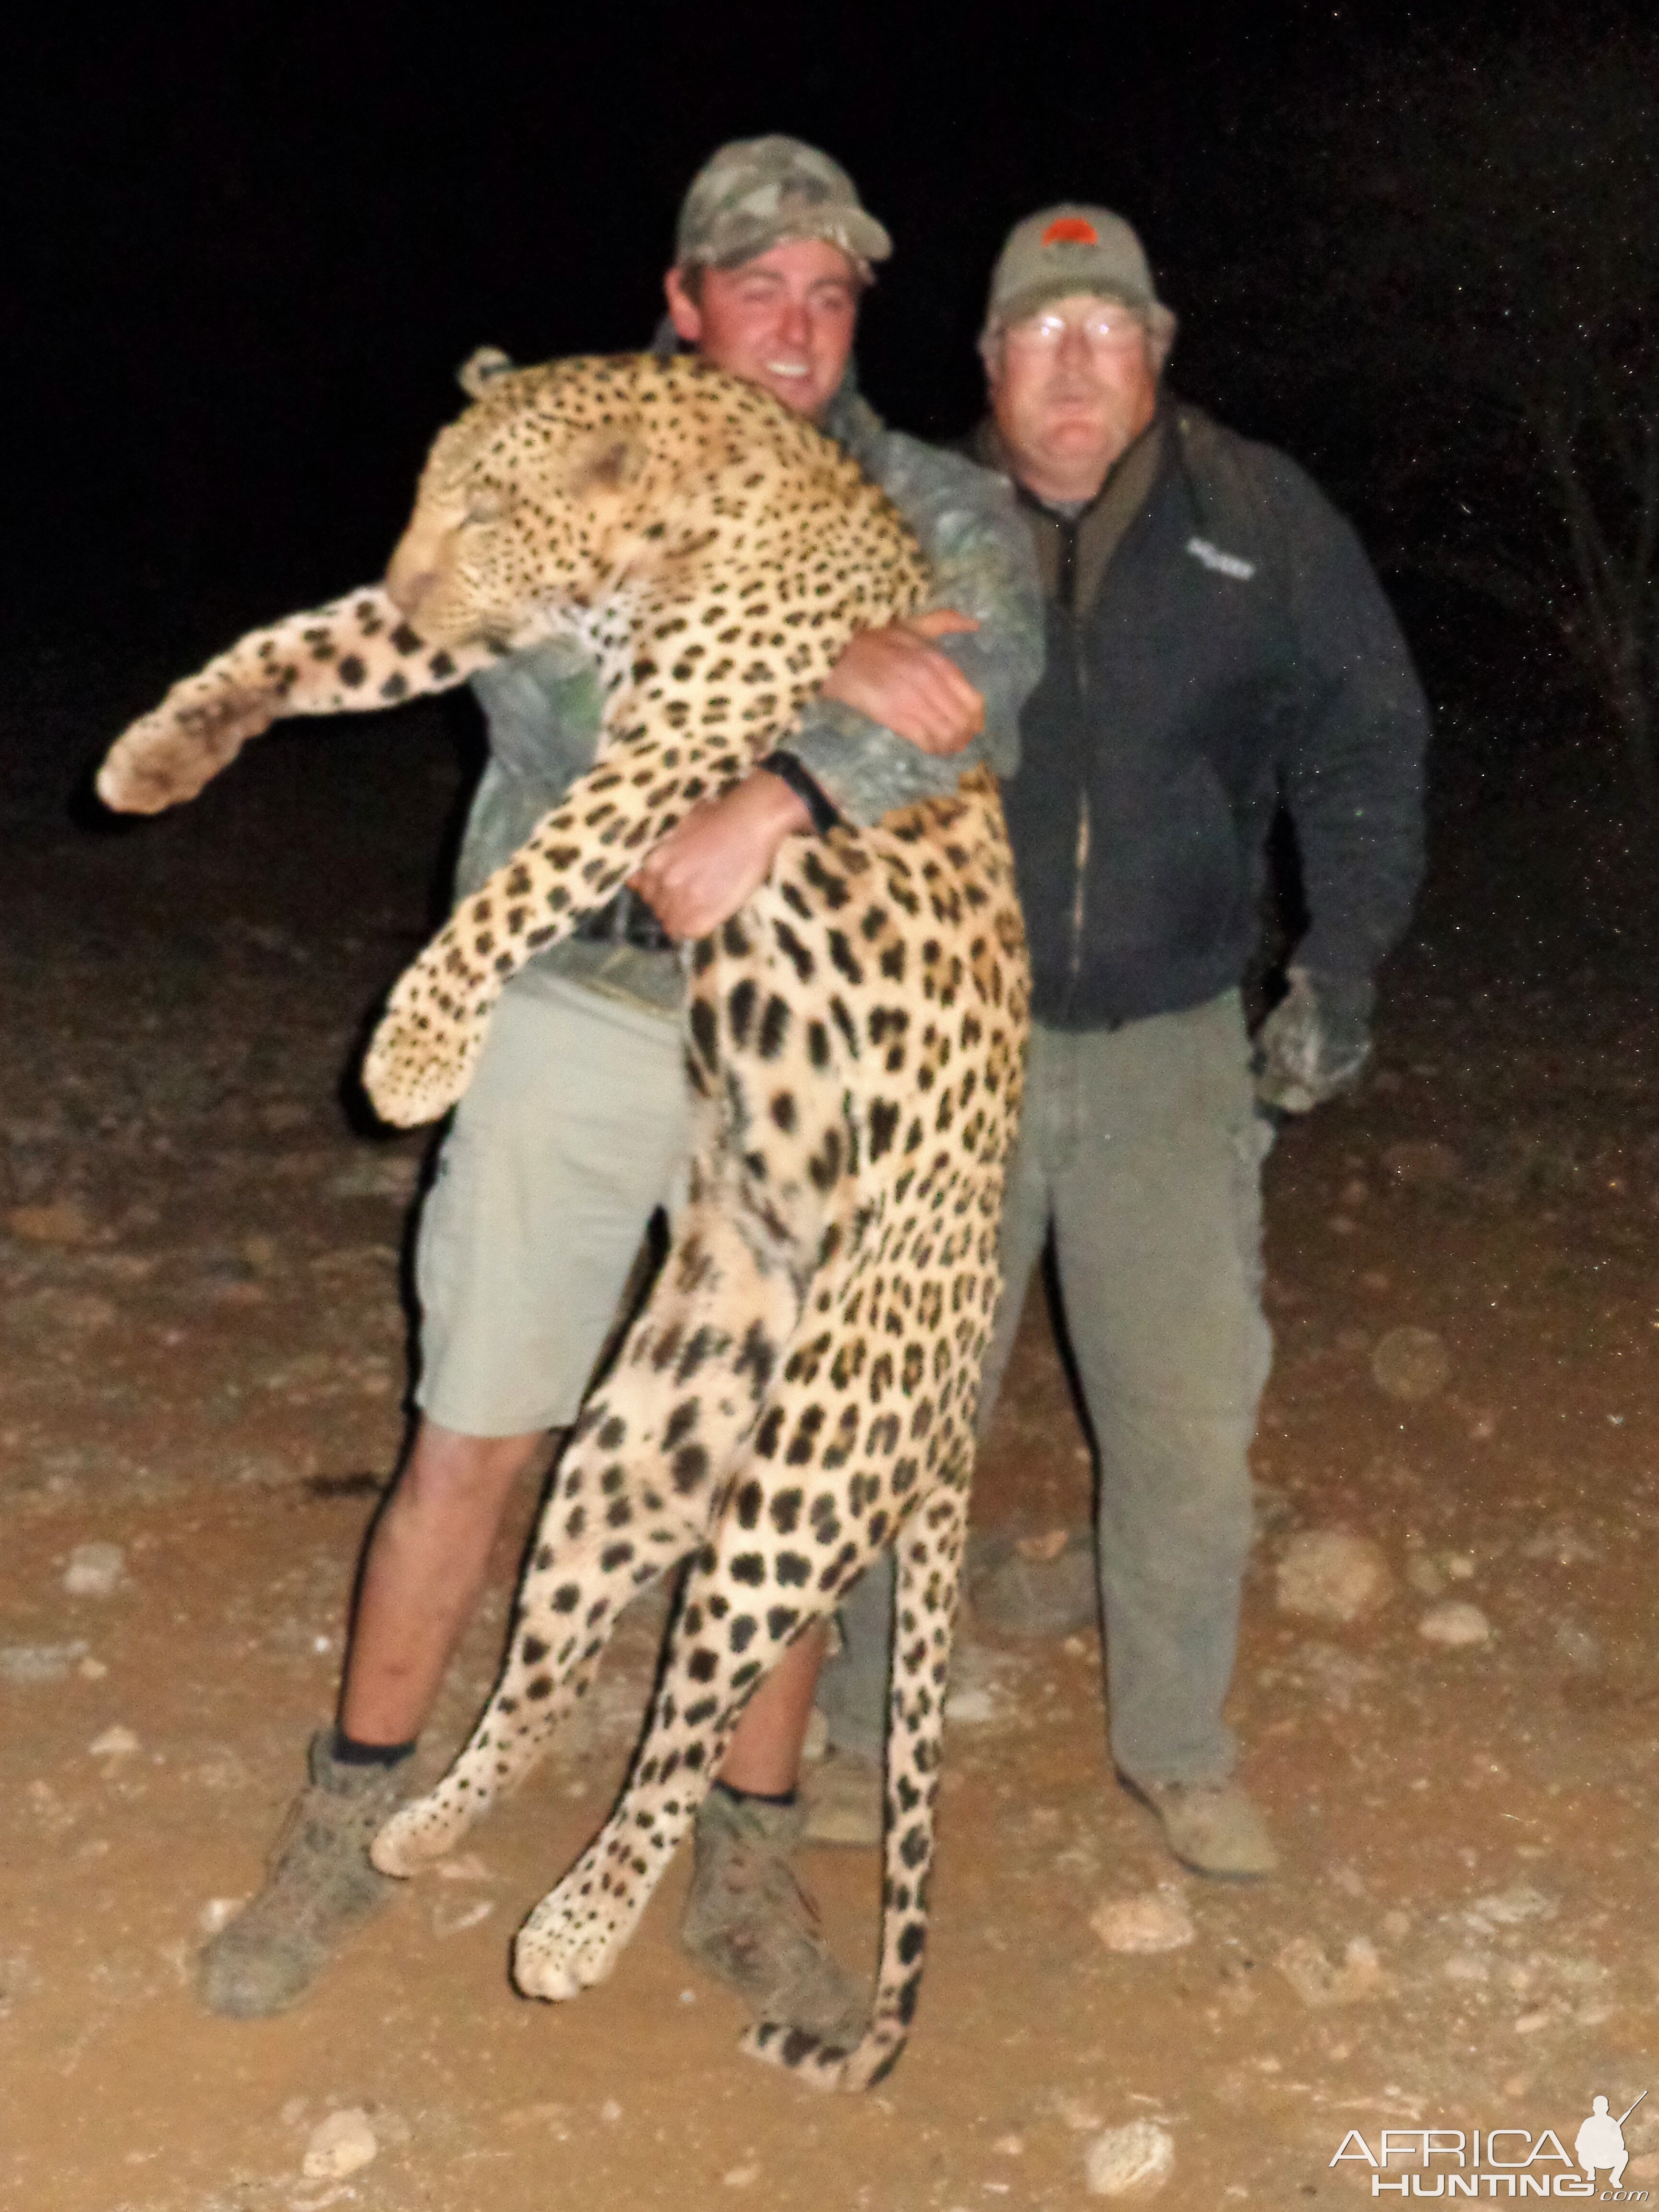 Hunt Leopard in Namibia